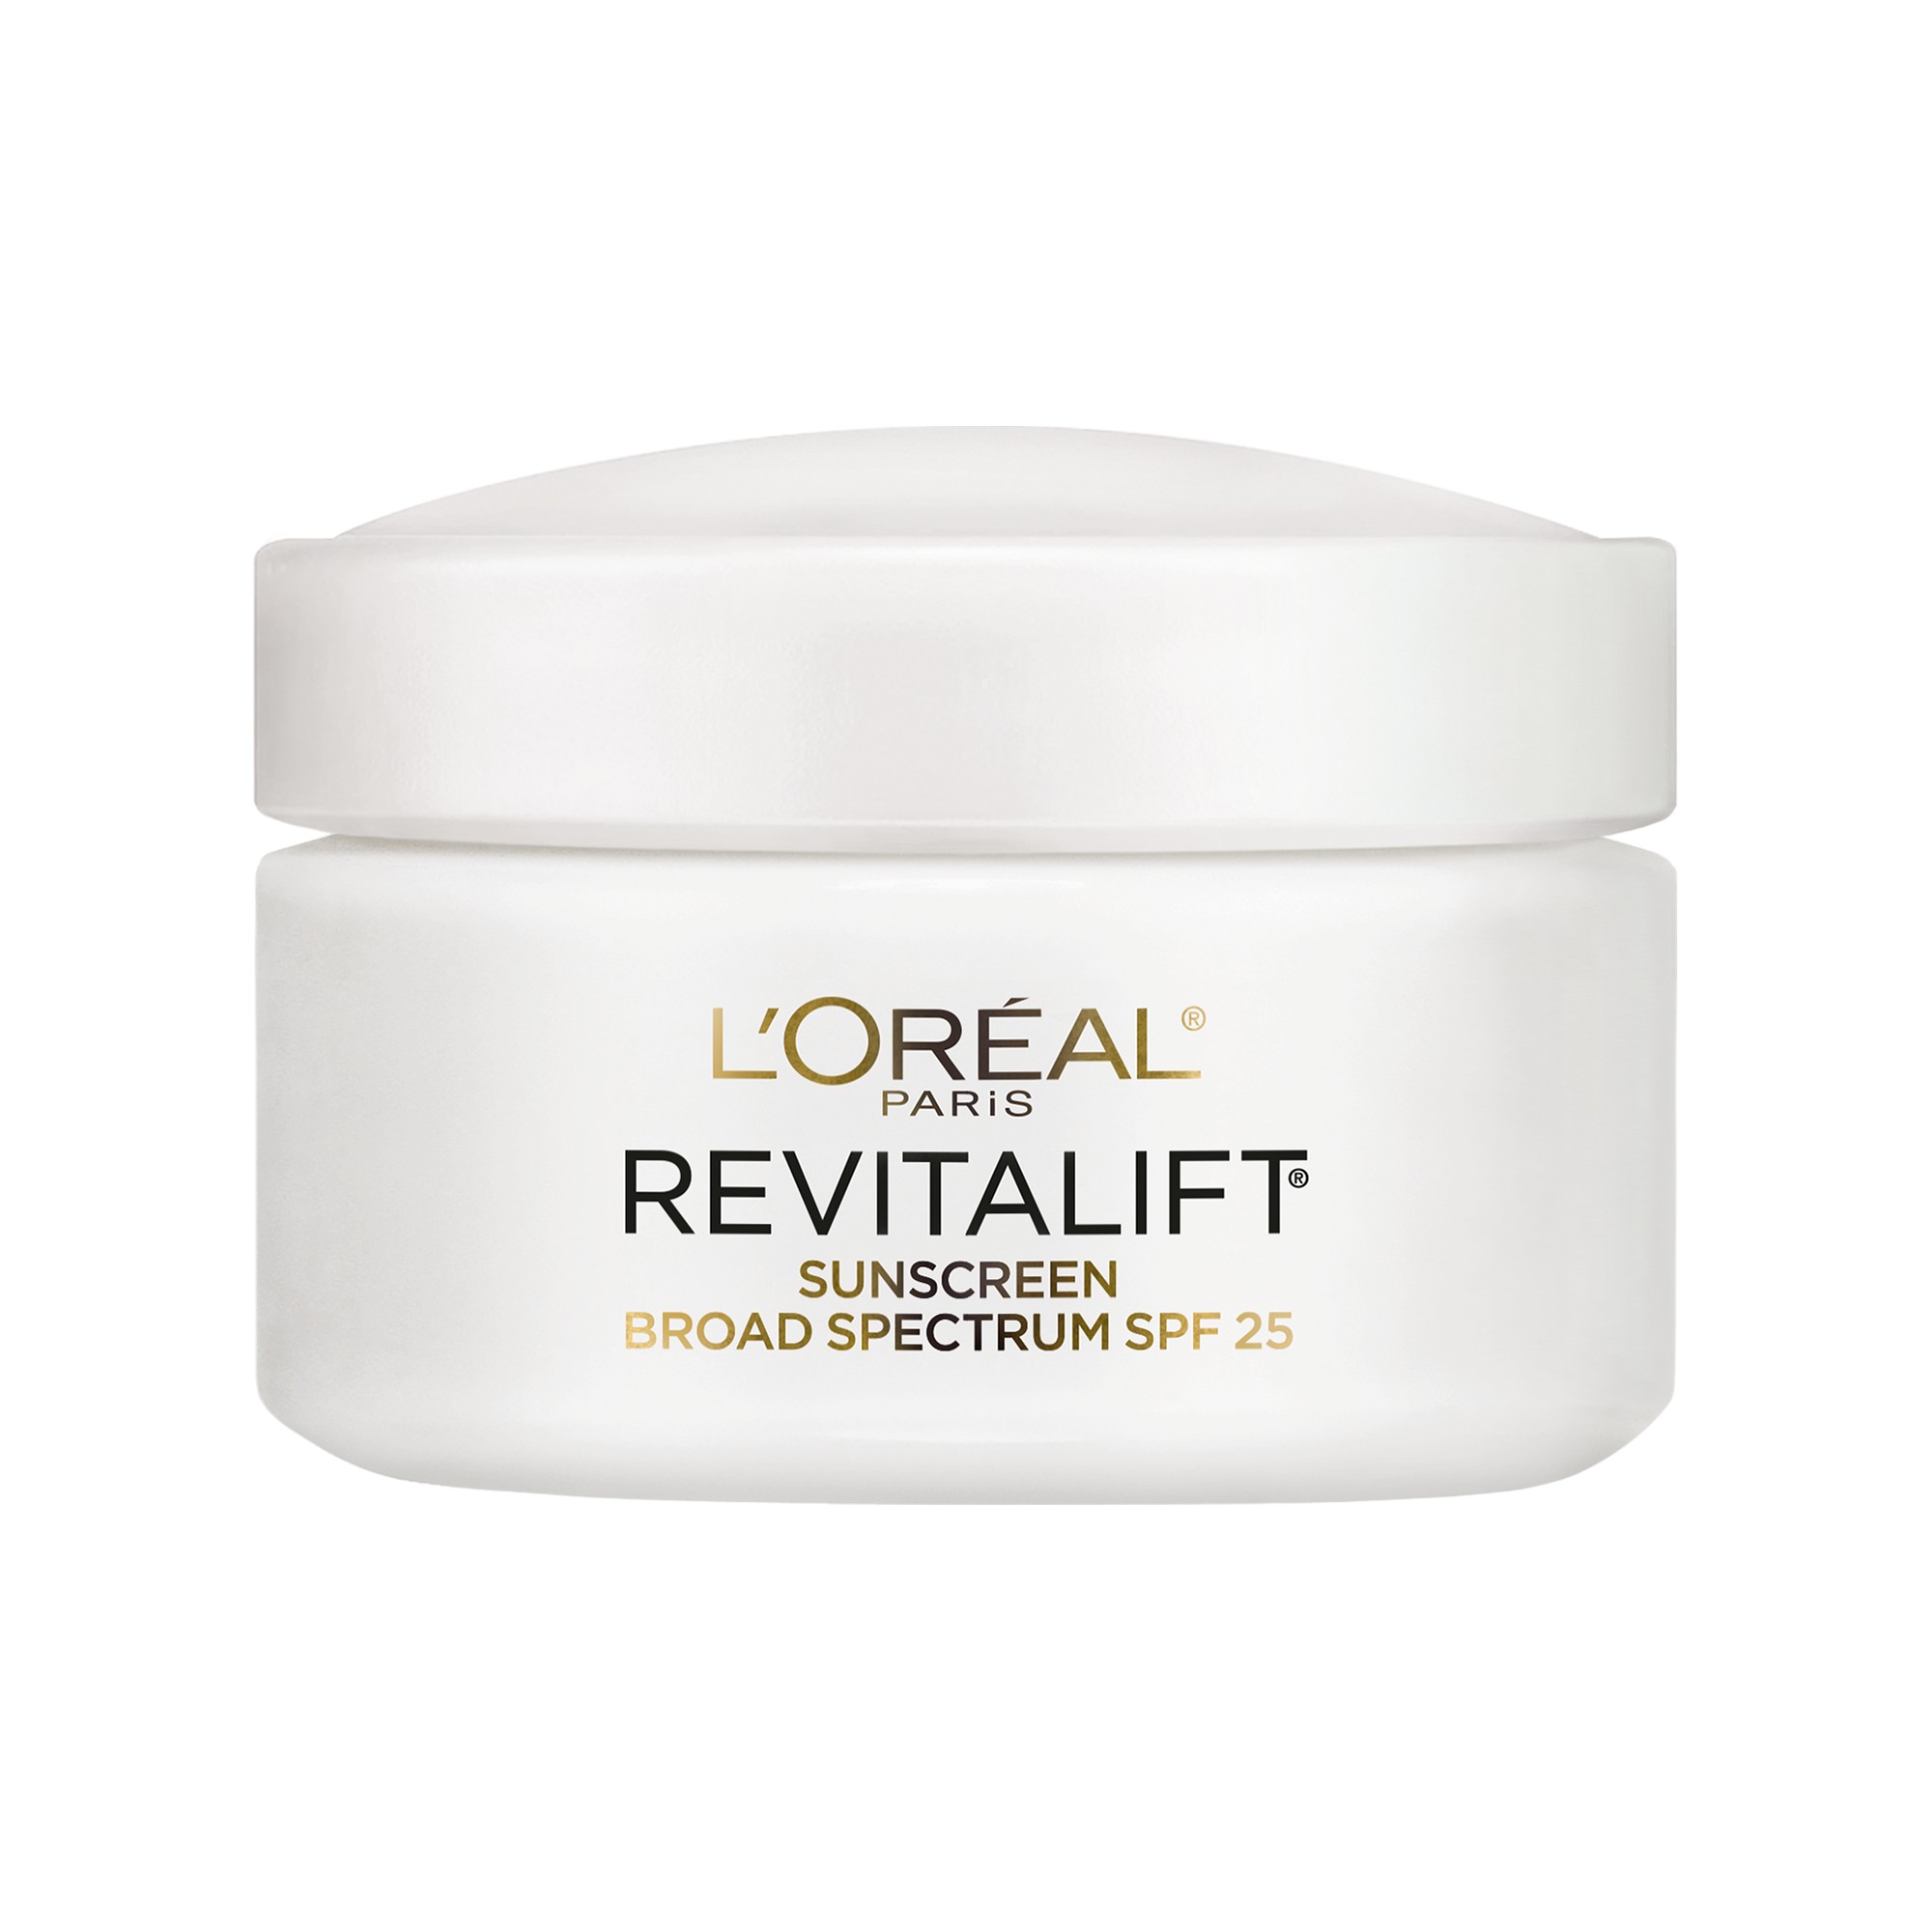 L'Oreal Paris Revitalift Anti-Wrinkle + Firming Day Cream SPF 25 - 1.7oz